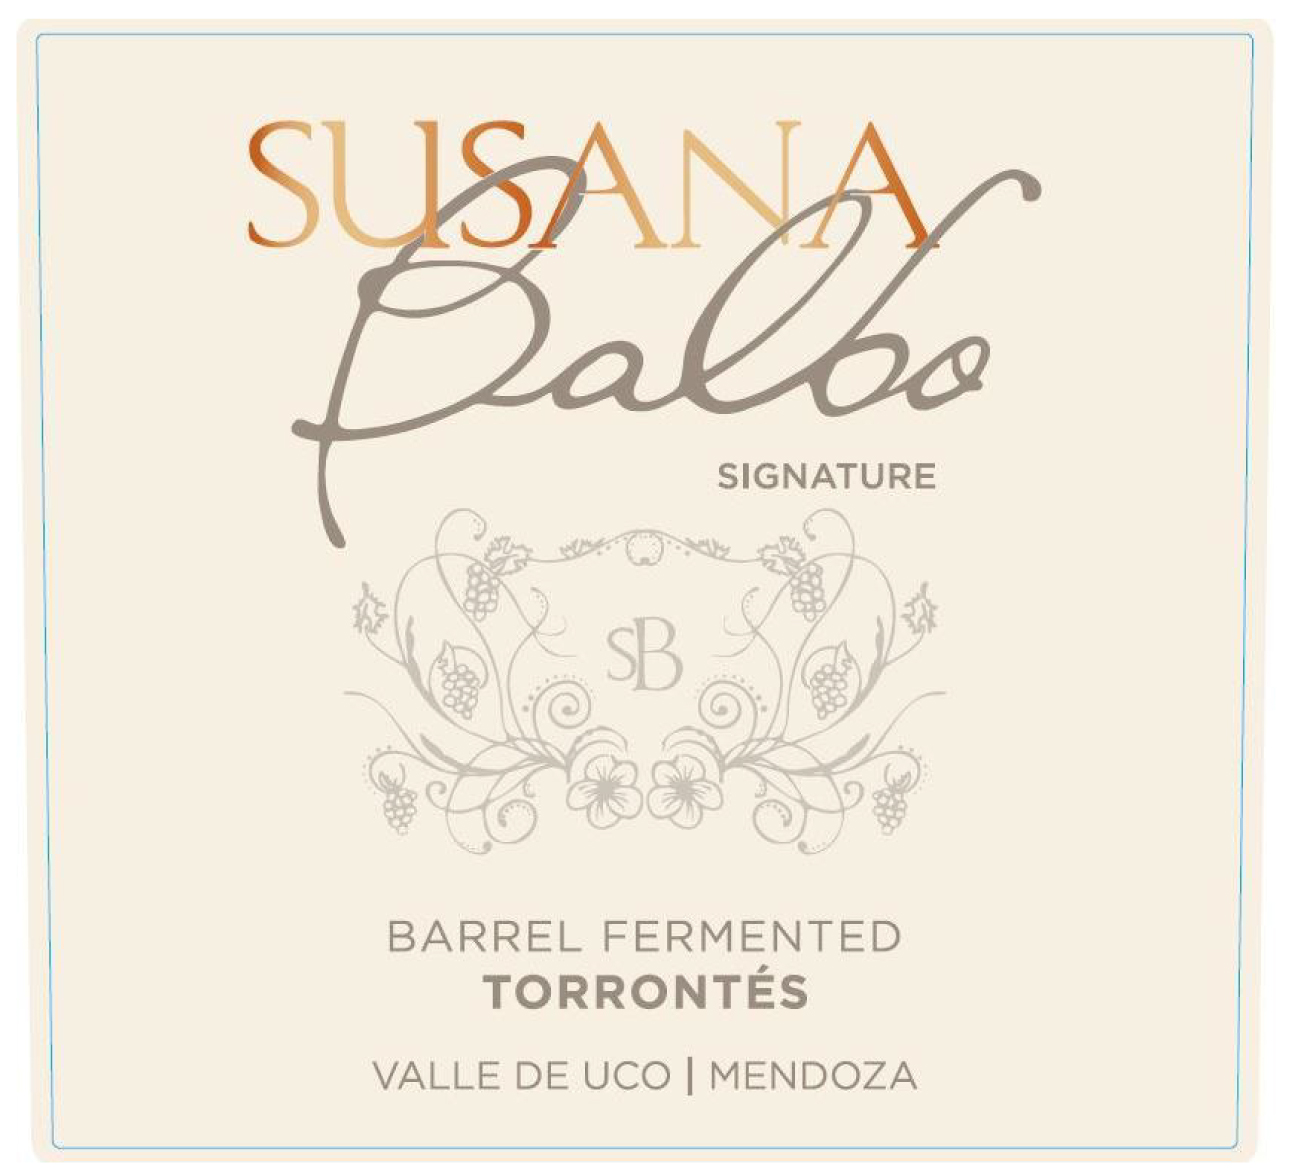 Susana Balbo - Barrel fermented Torrontes label